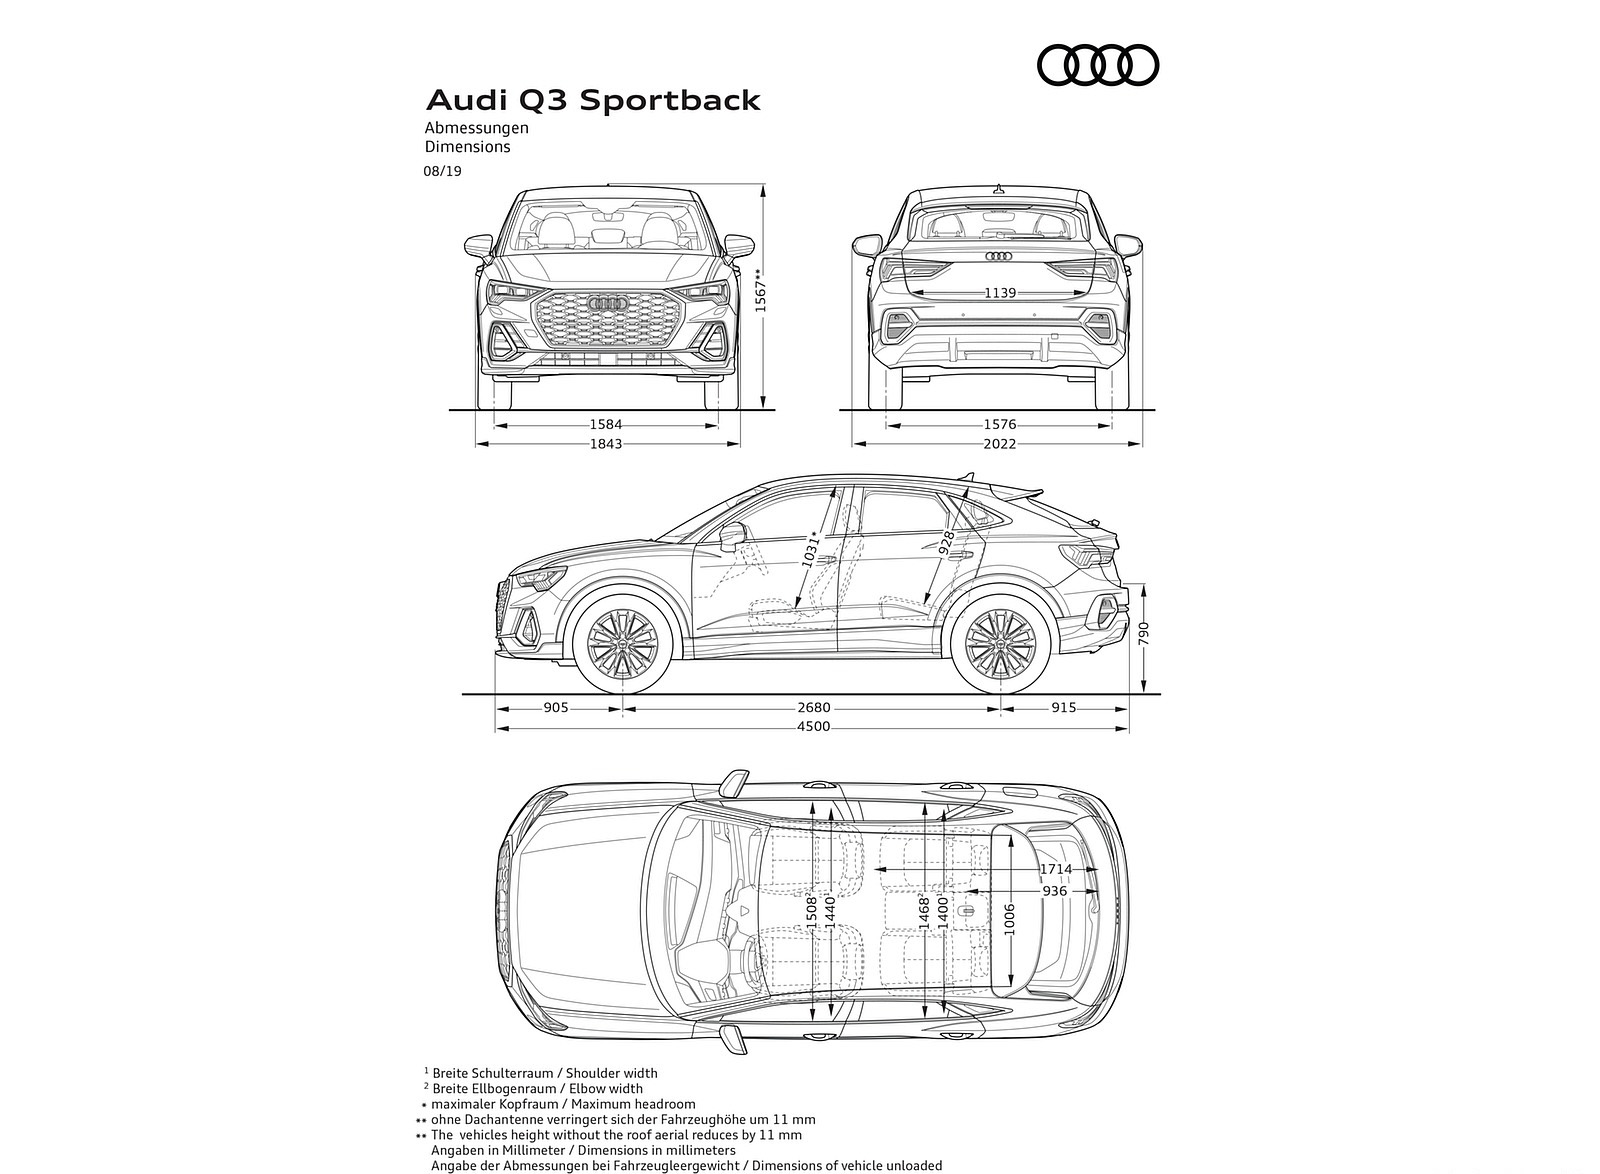 2020 Audi Q3 Sportback Dimensions Wallpapers #280 of 285